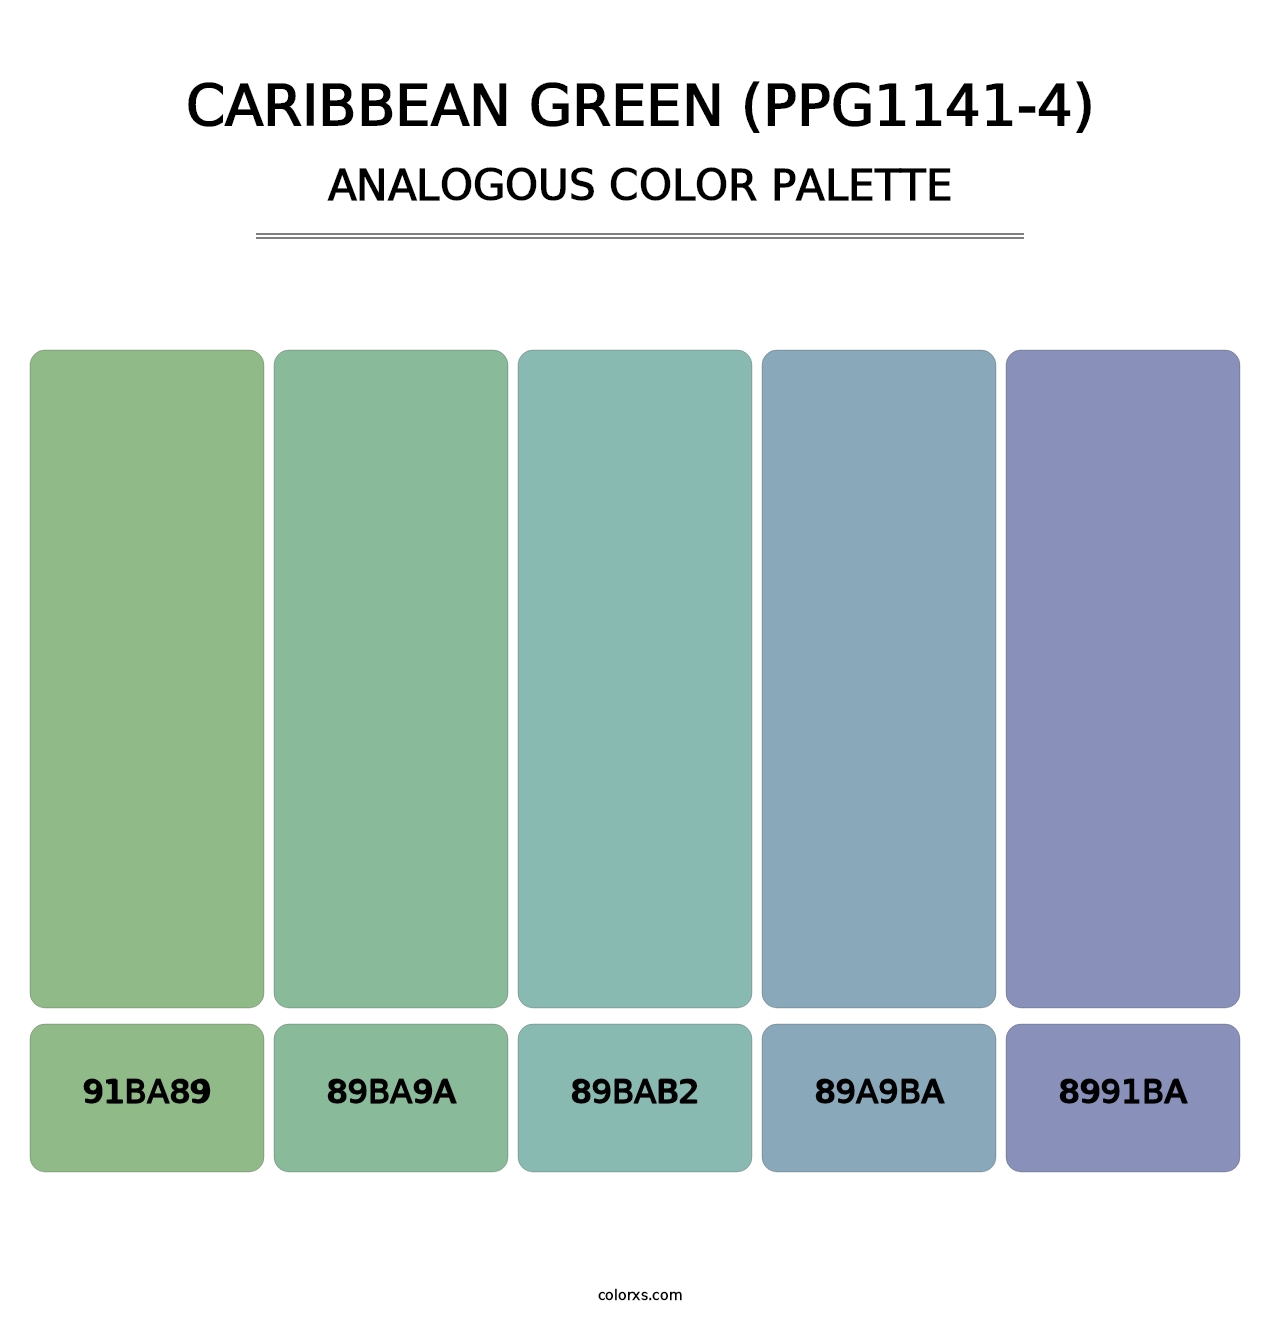 Caribbean Green (PPG1141-4) - Analogous Color Palette